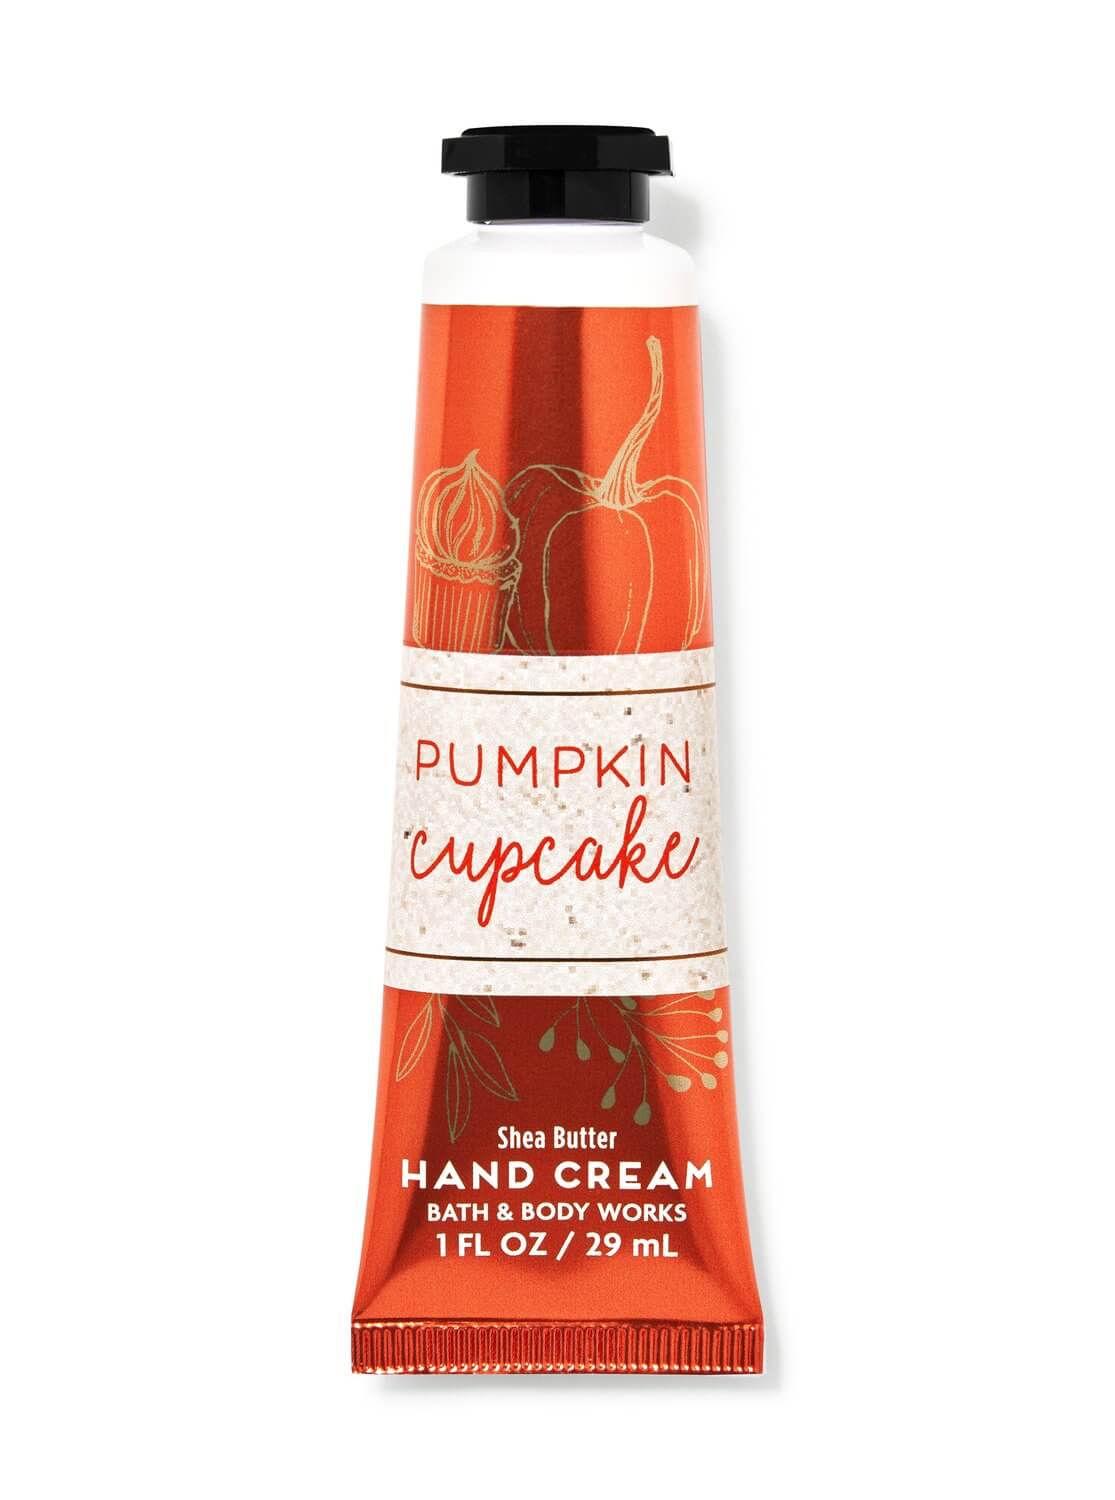 Bath & Body Works Pumpkin Cupcake Hand Cream 29ml